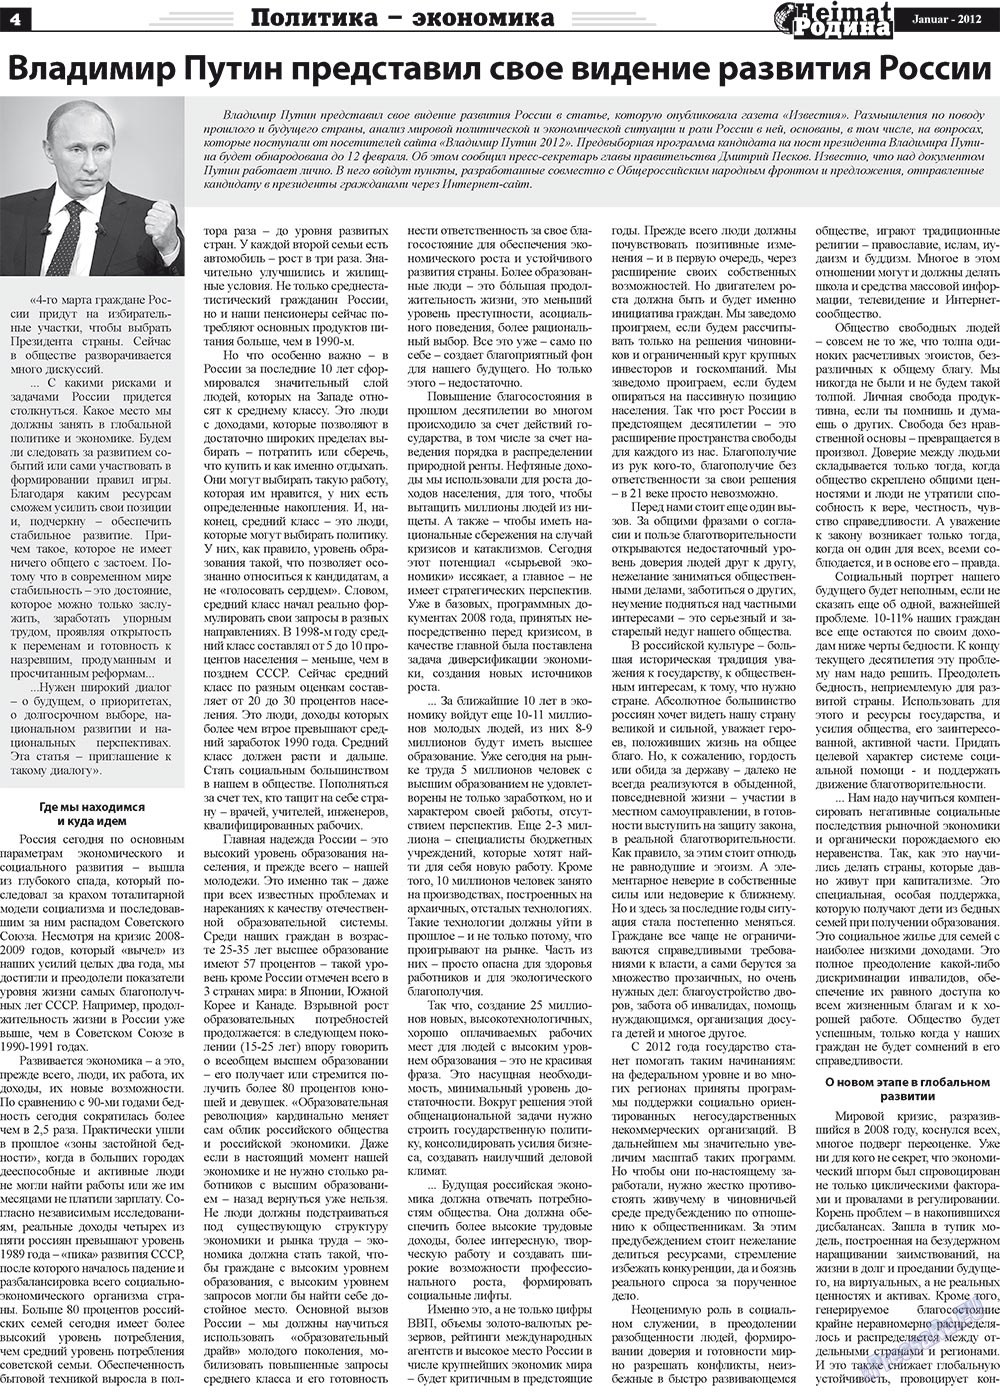 Heimat-Родина, газета. 2012 №1 стр.4